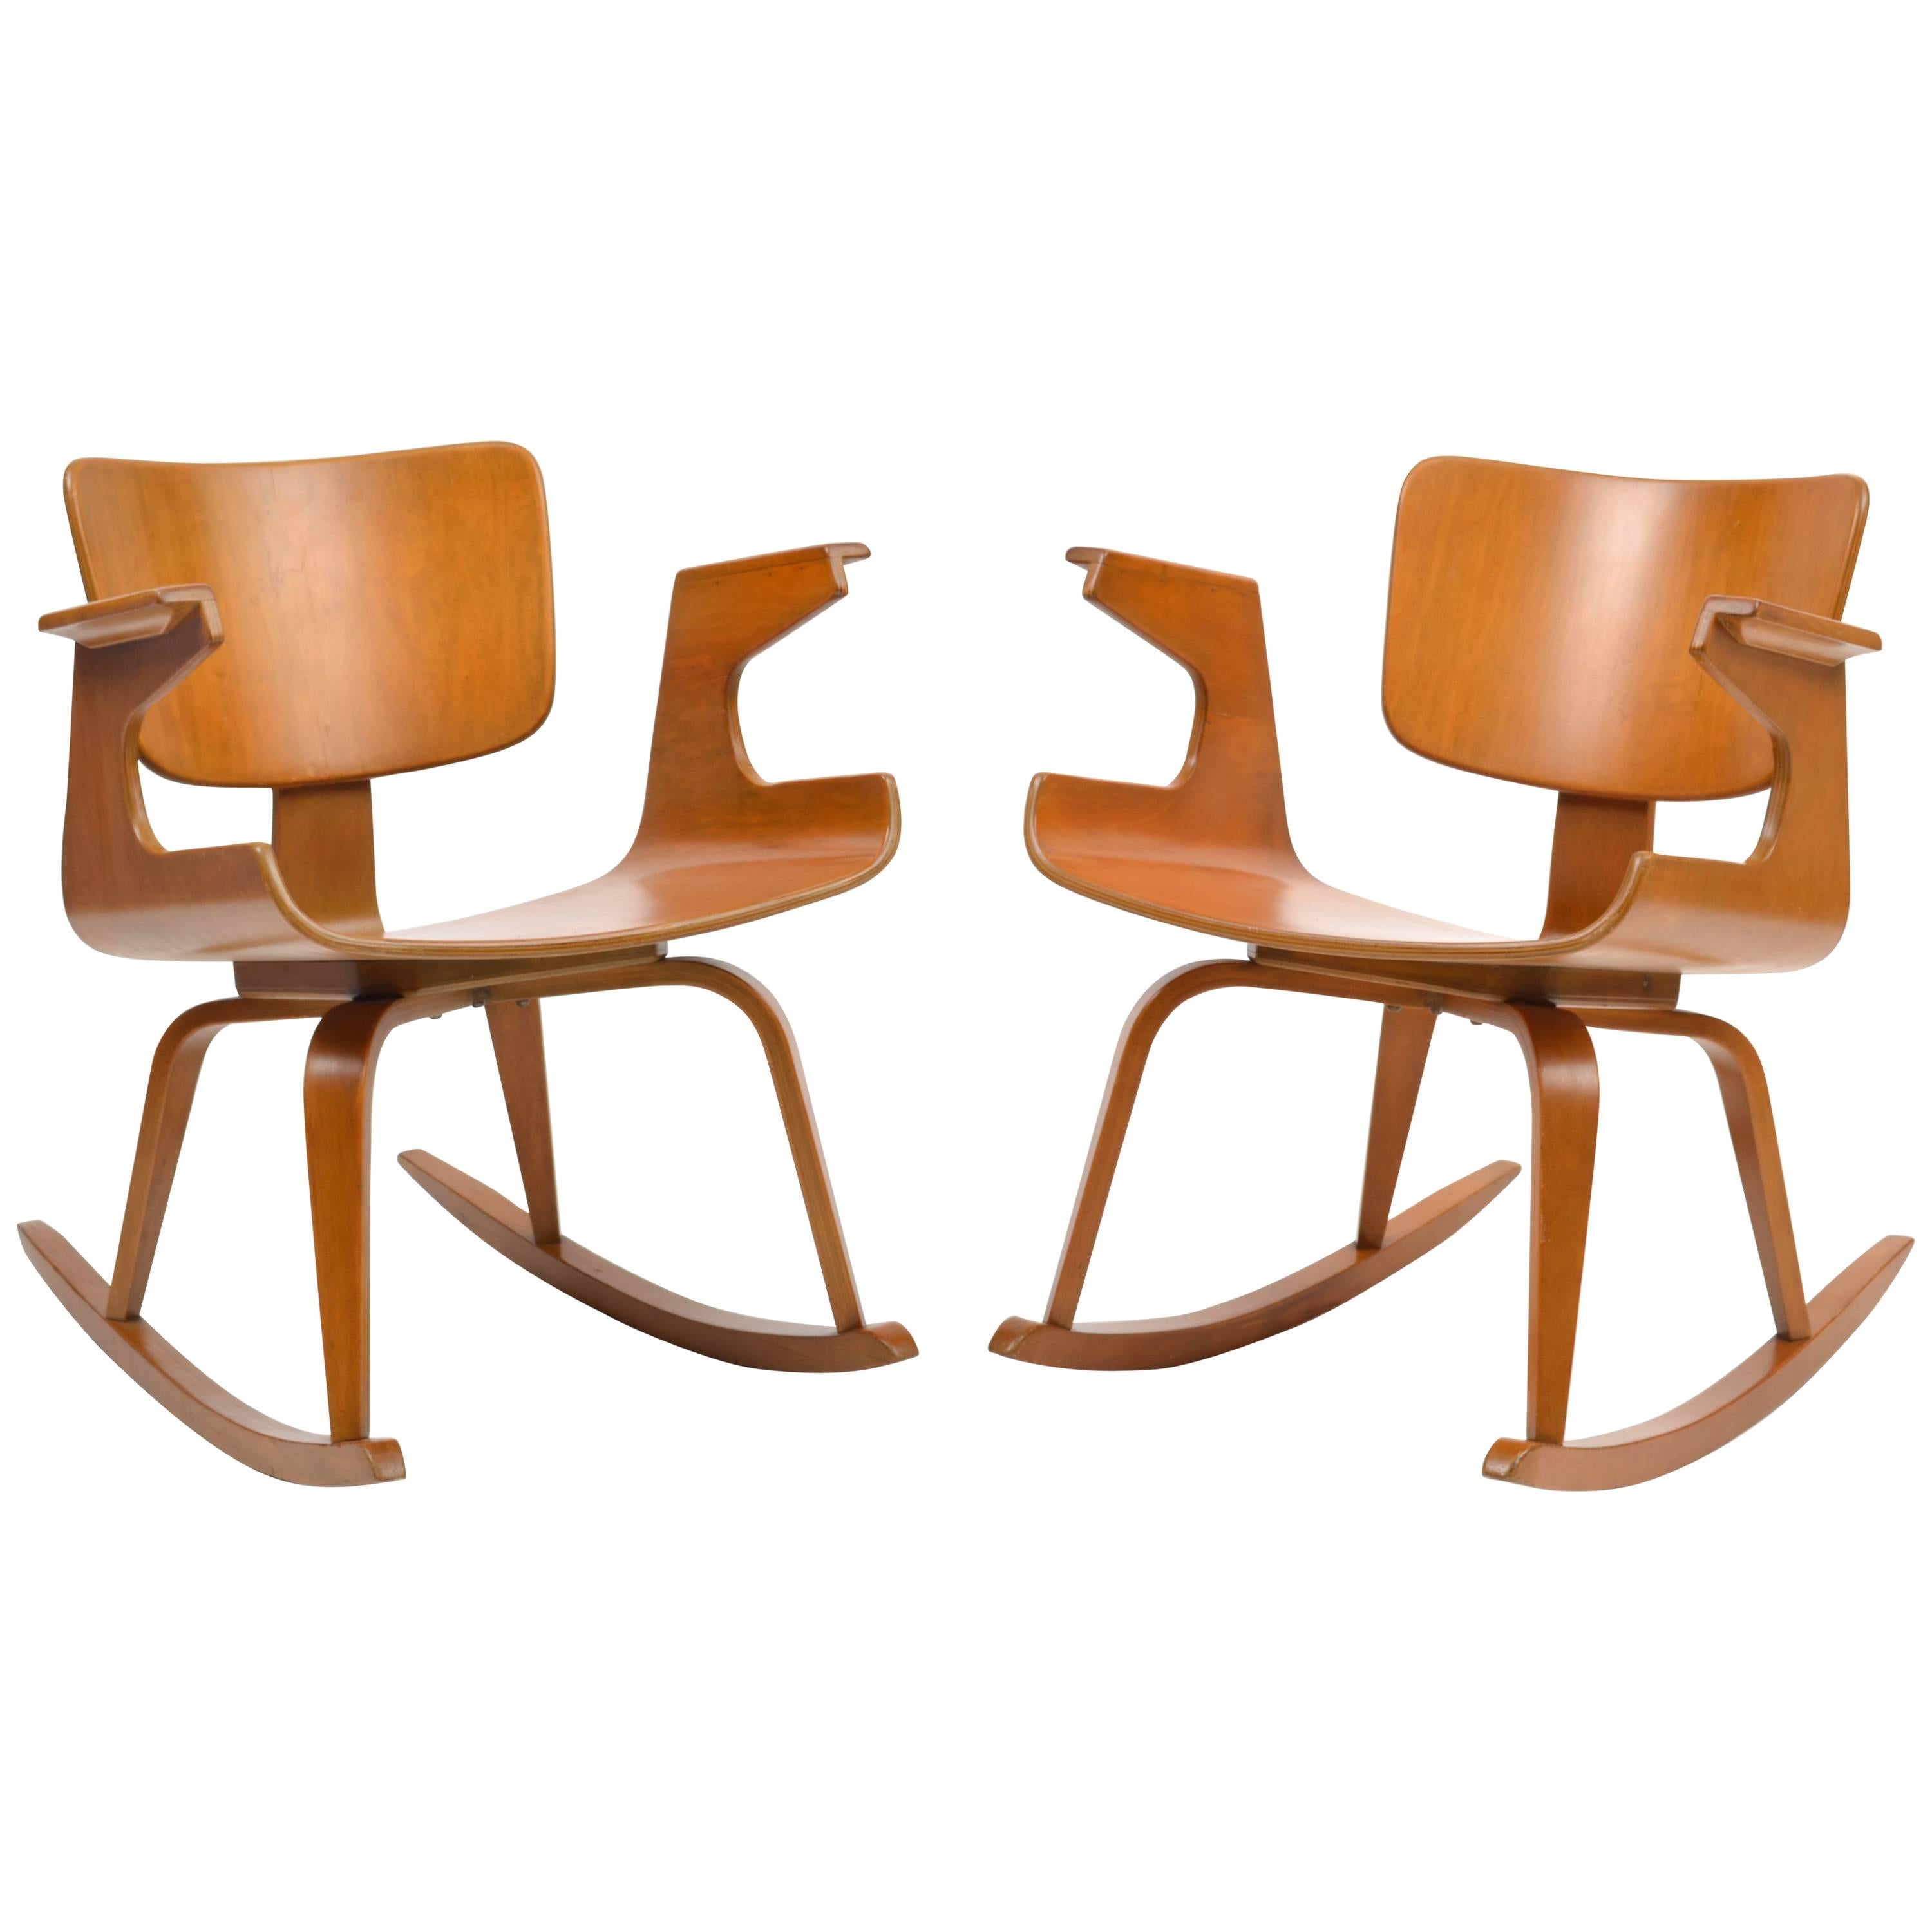 Rare 1950s Thonet Plywood Rocking Chairs